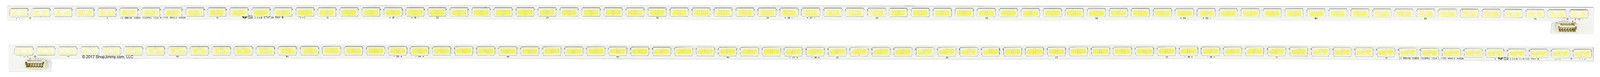 NEC 7030 PKG 72EA REEMPLAZO LED BACKLIGHT BARS/STRIPS (2) - USADO